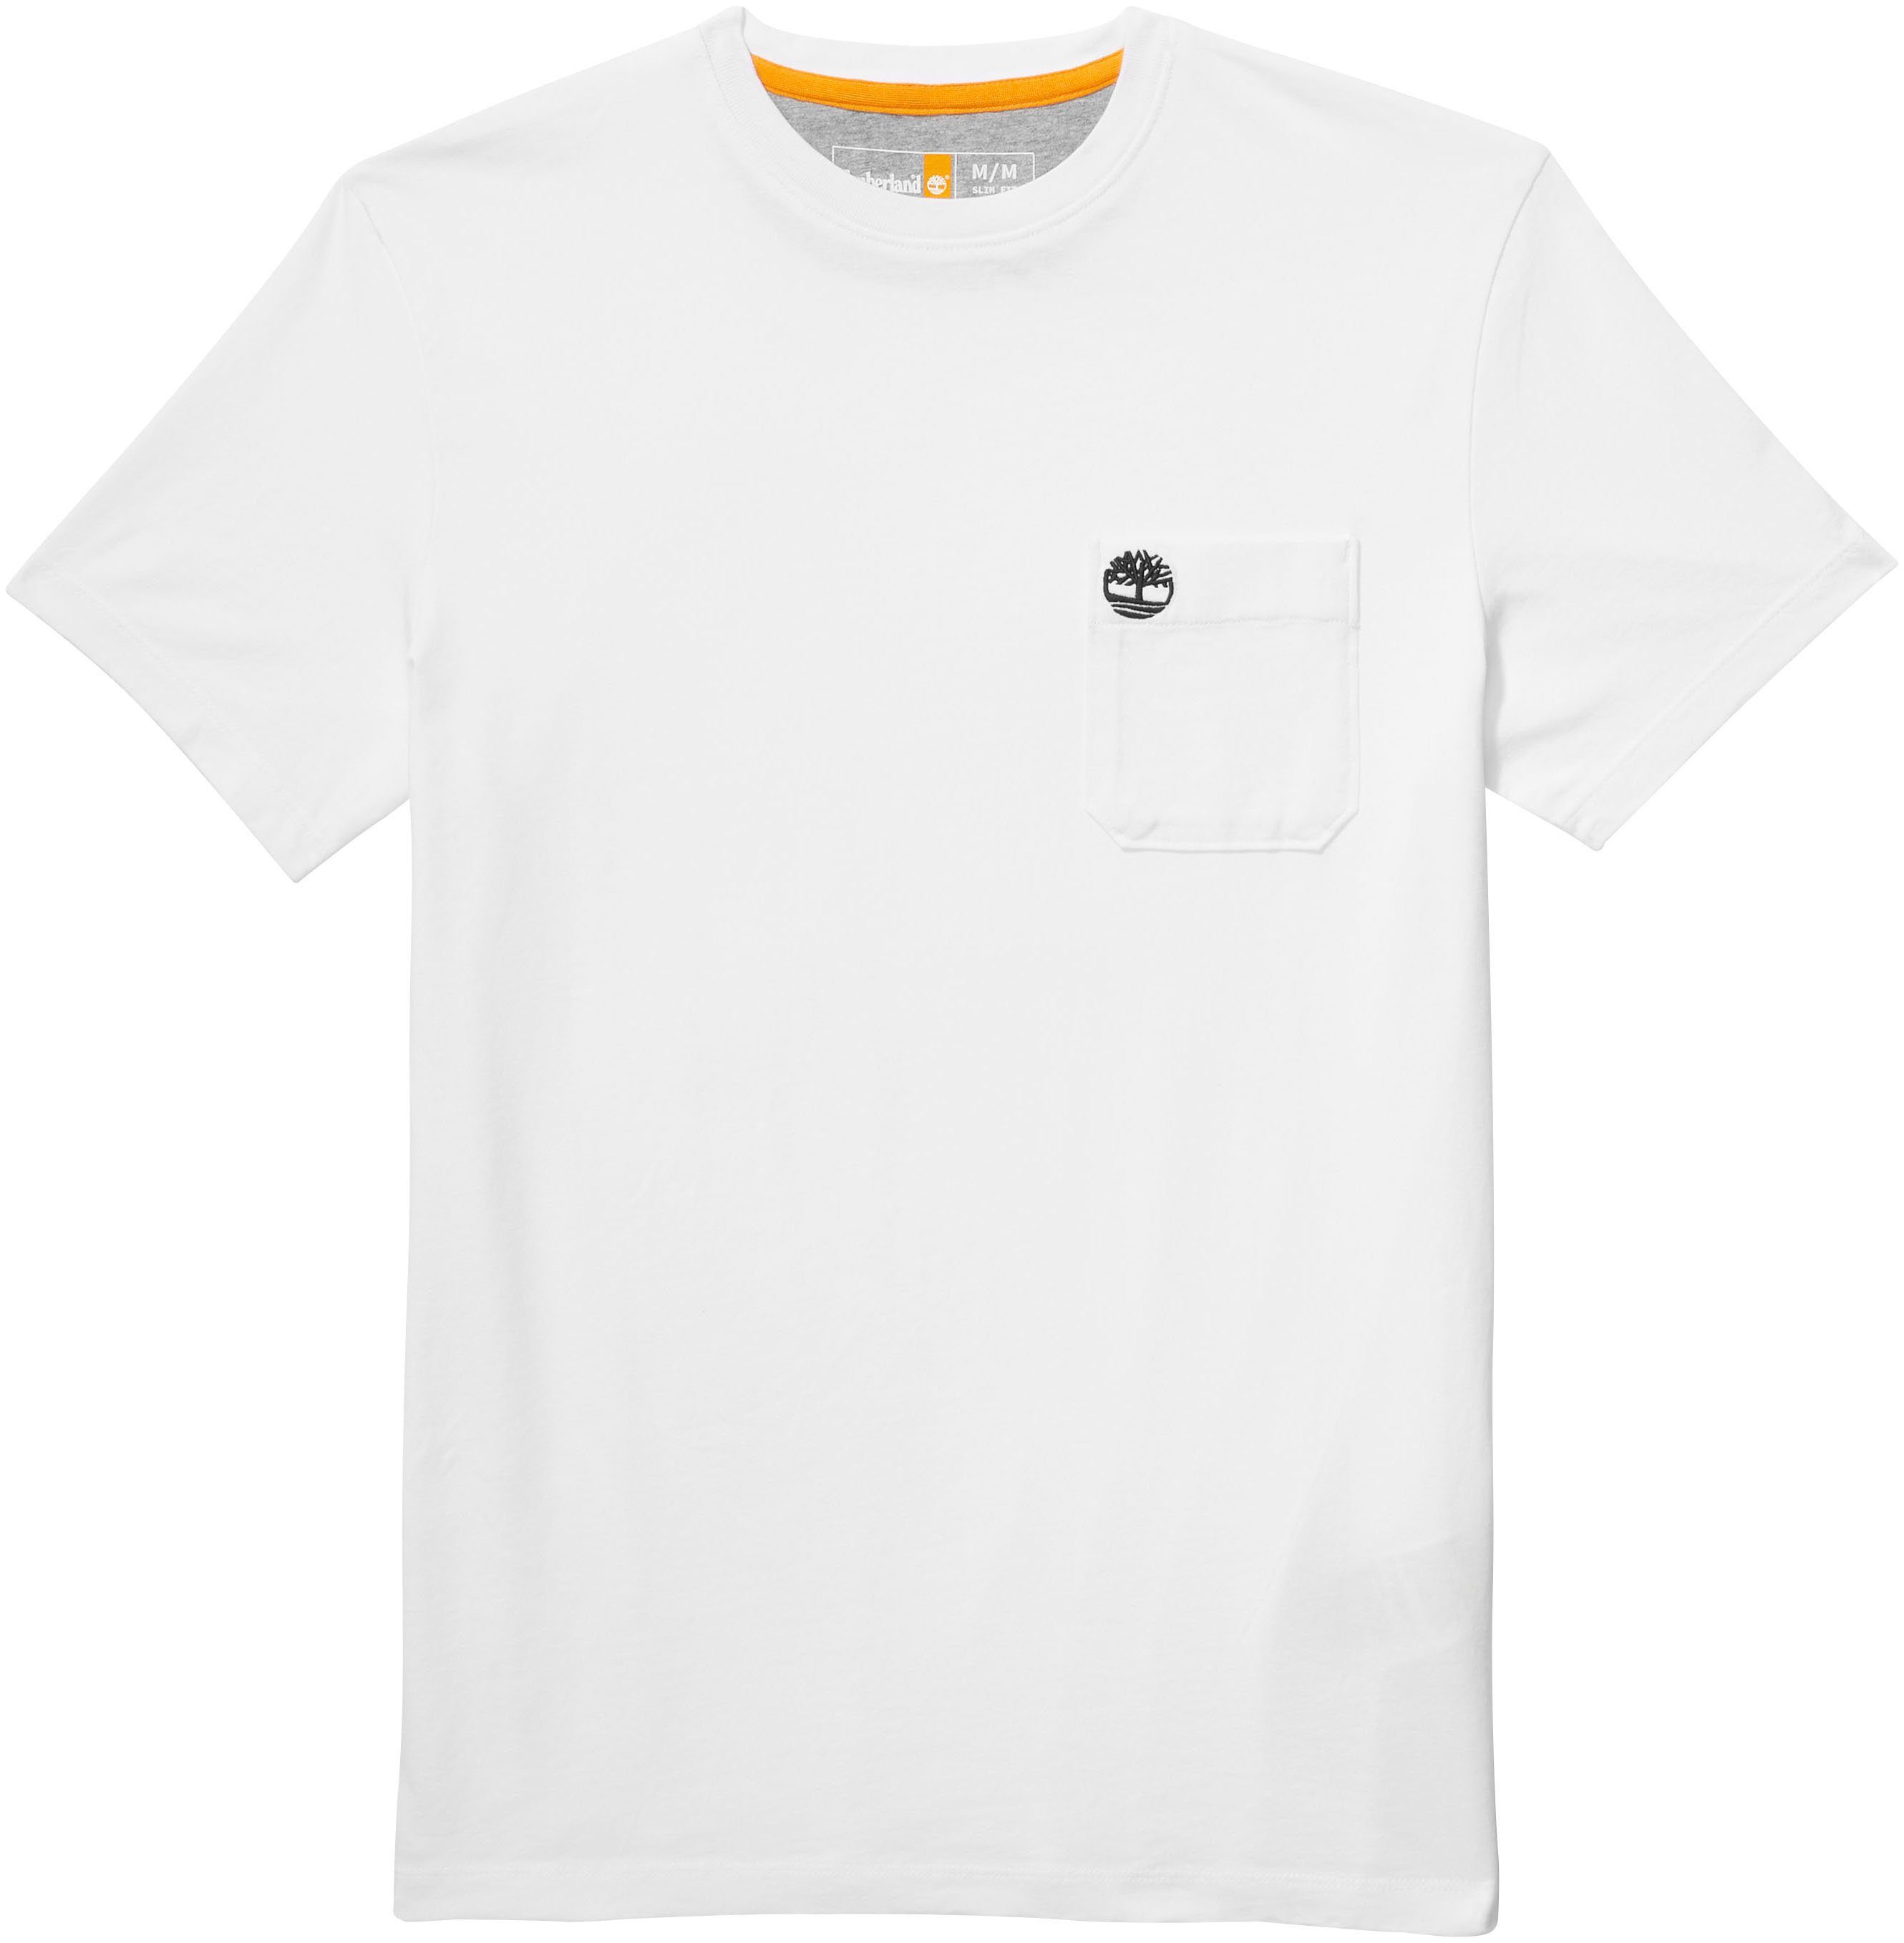 Timberland T-Shirt white DUNSTAN RIVER